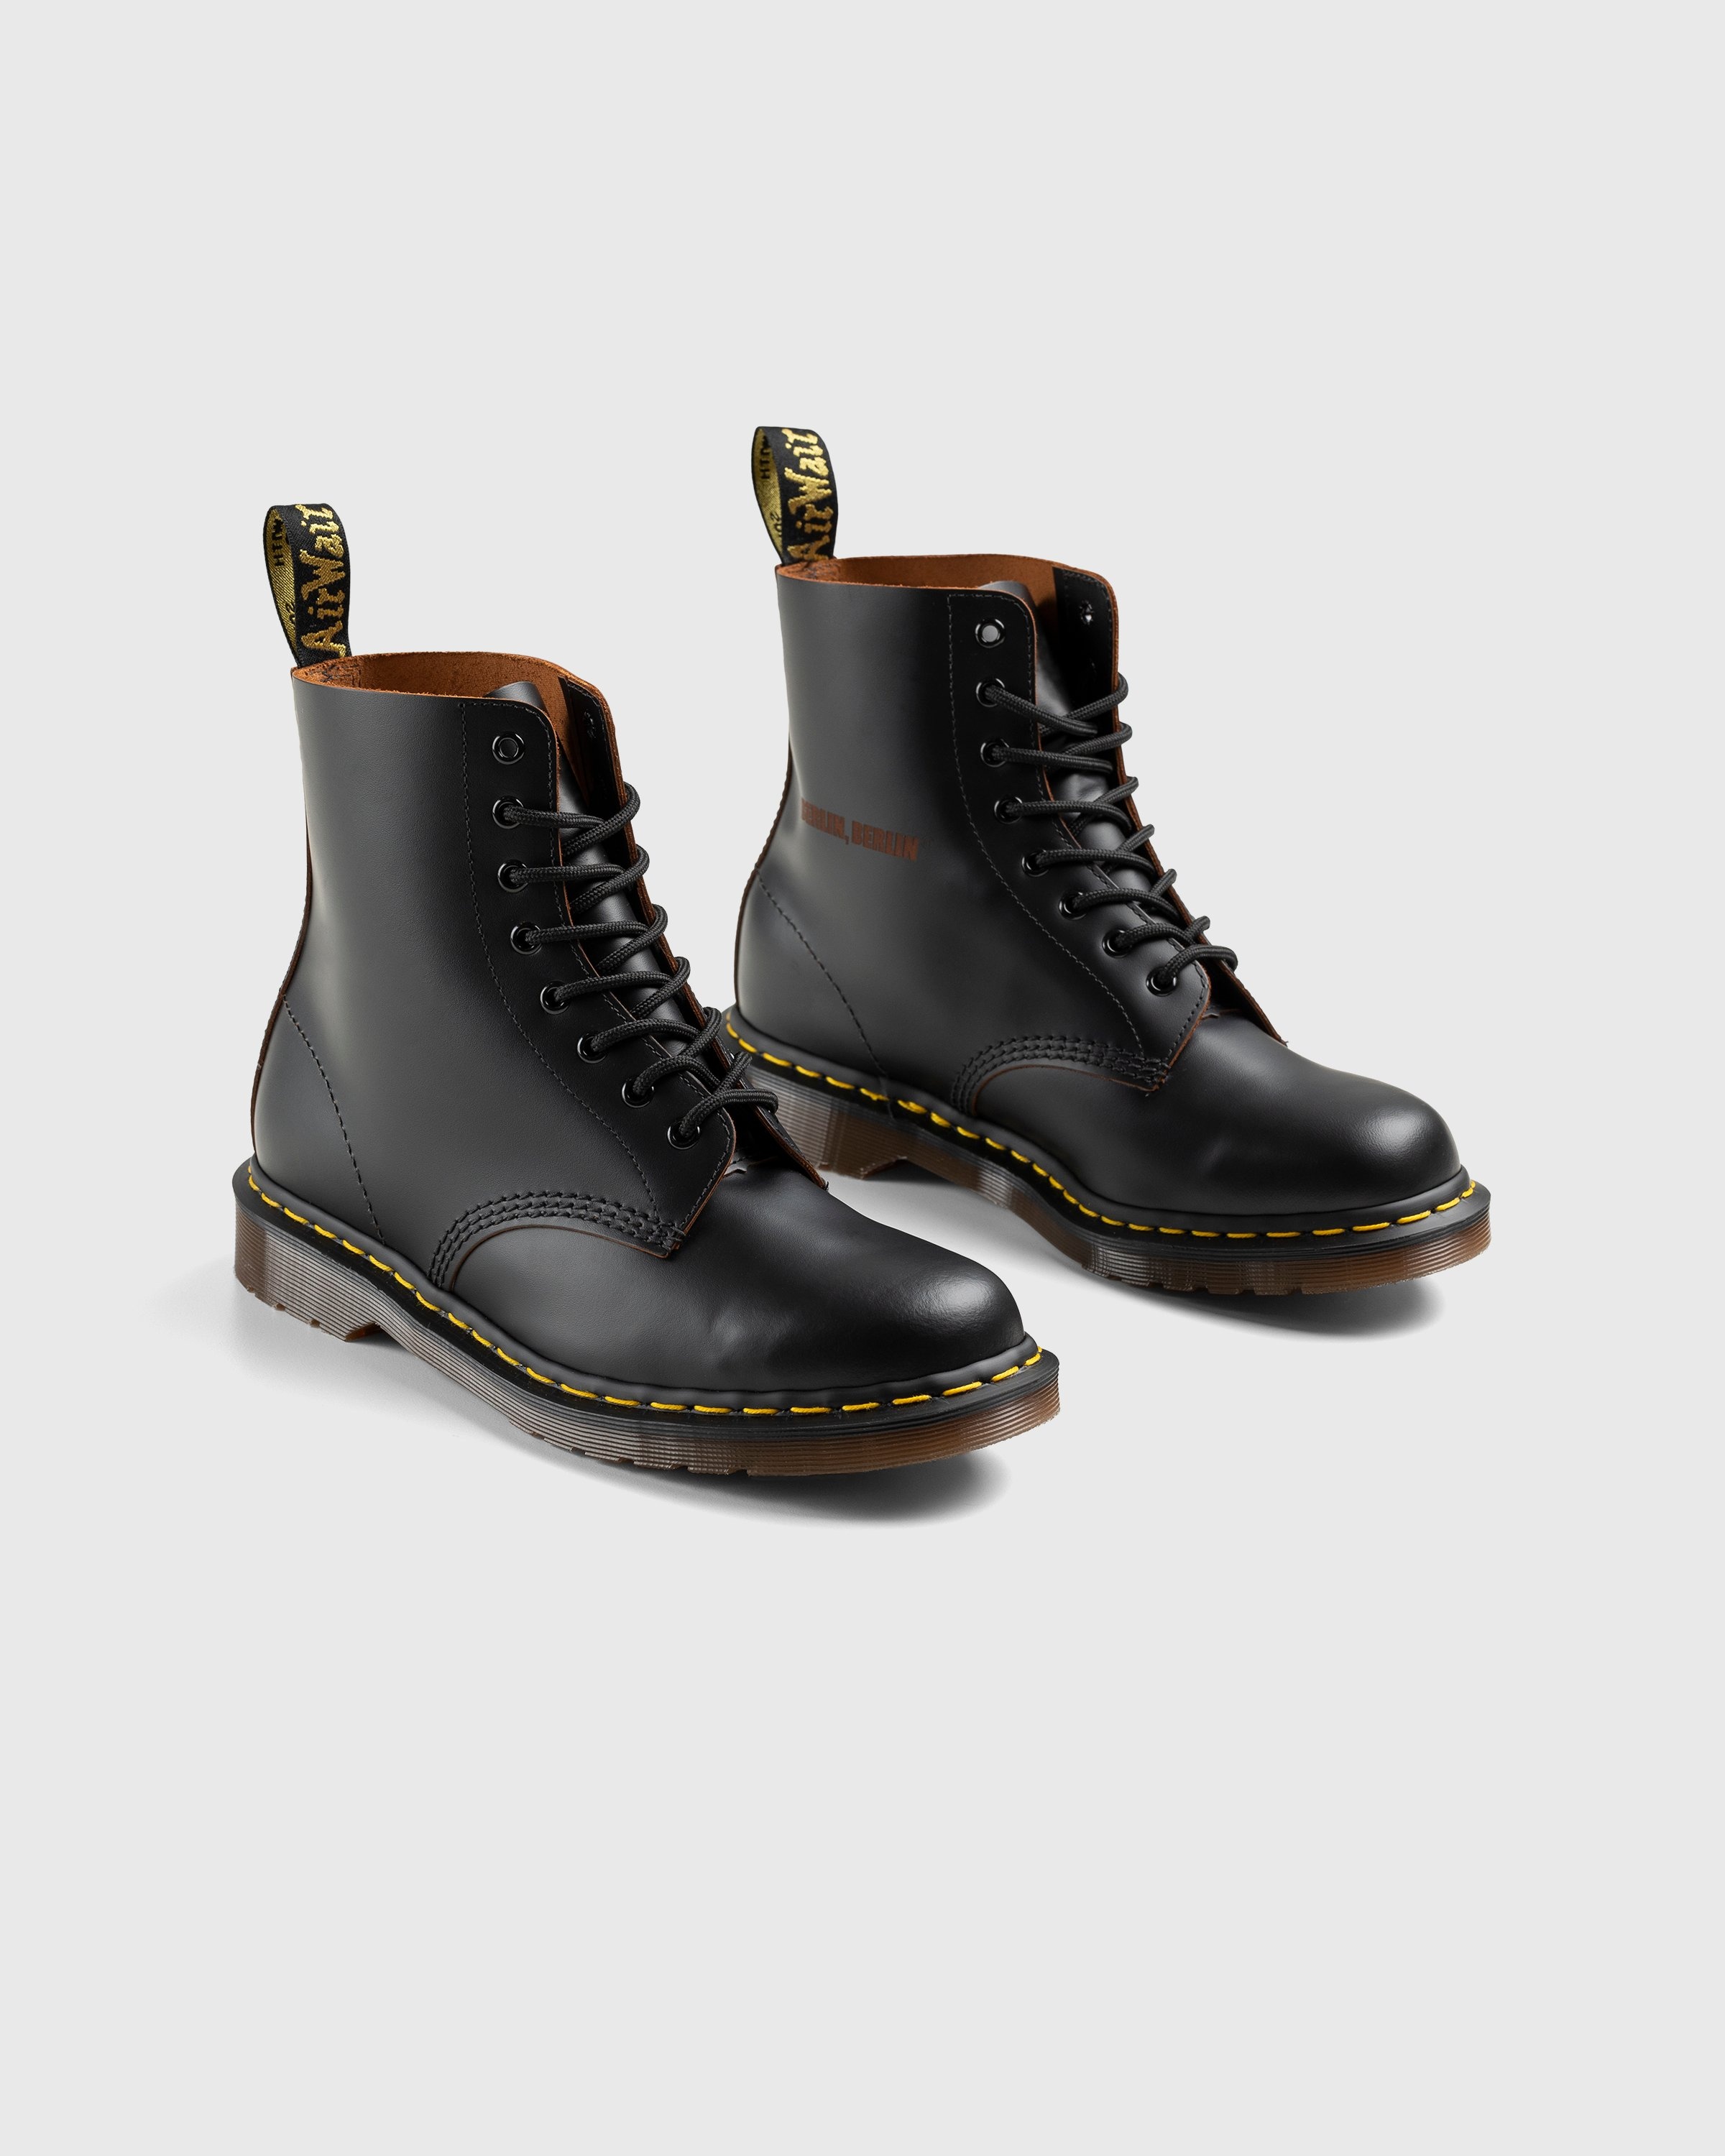 Dr. Martens x Highsnobiety – 1460 Vintage BERLIN, BERLIN 3 Black - Laced Up Boots - Black - Image 3